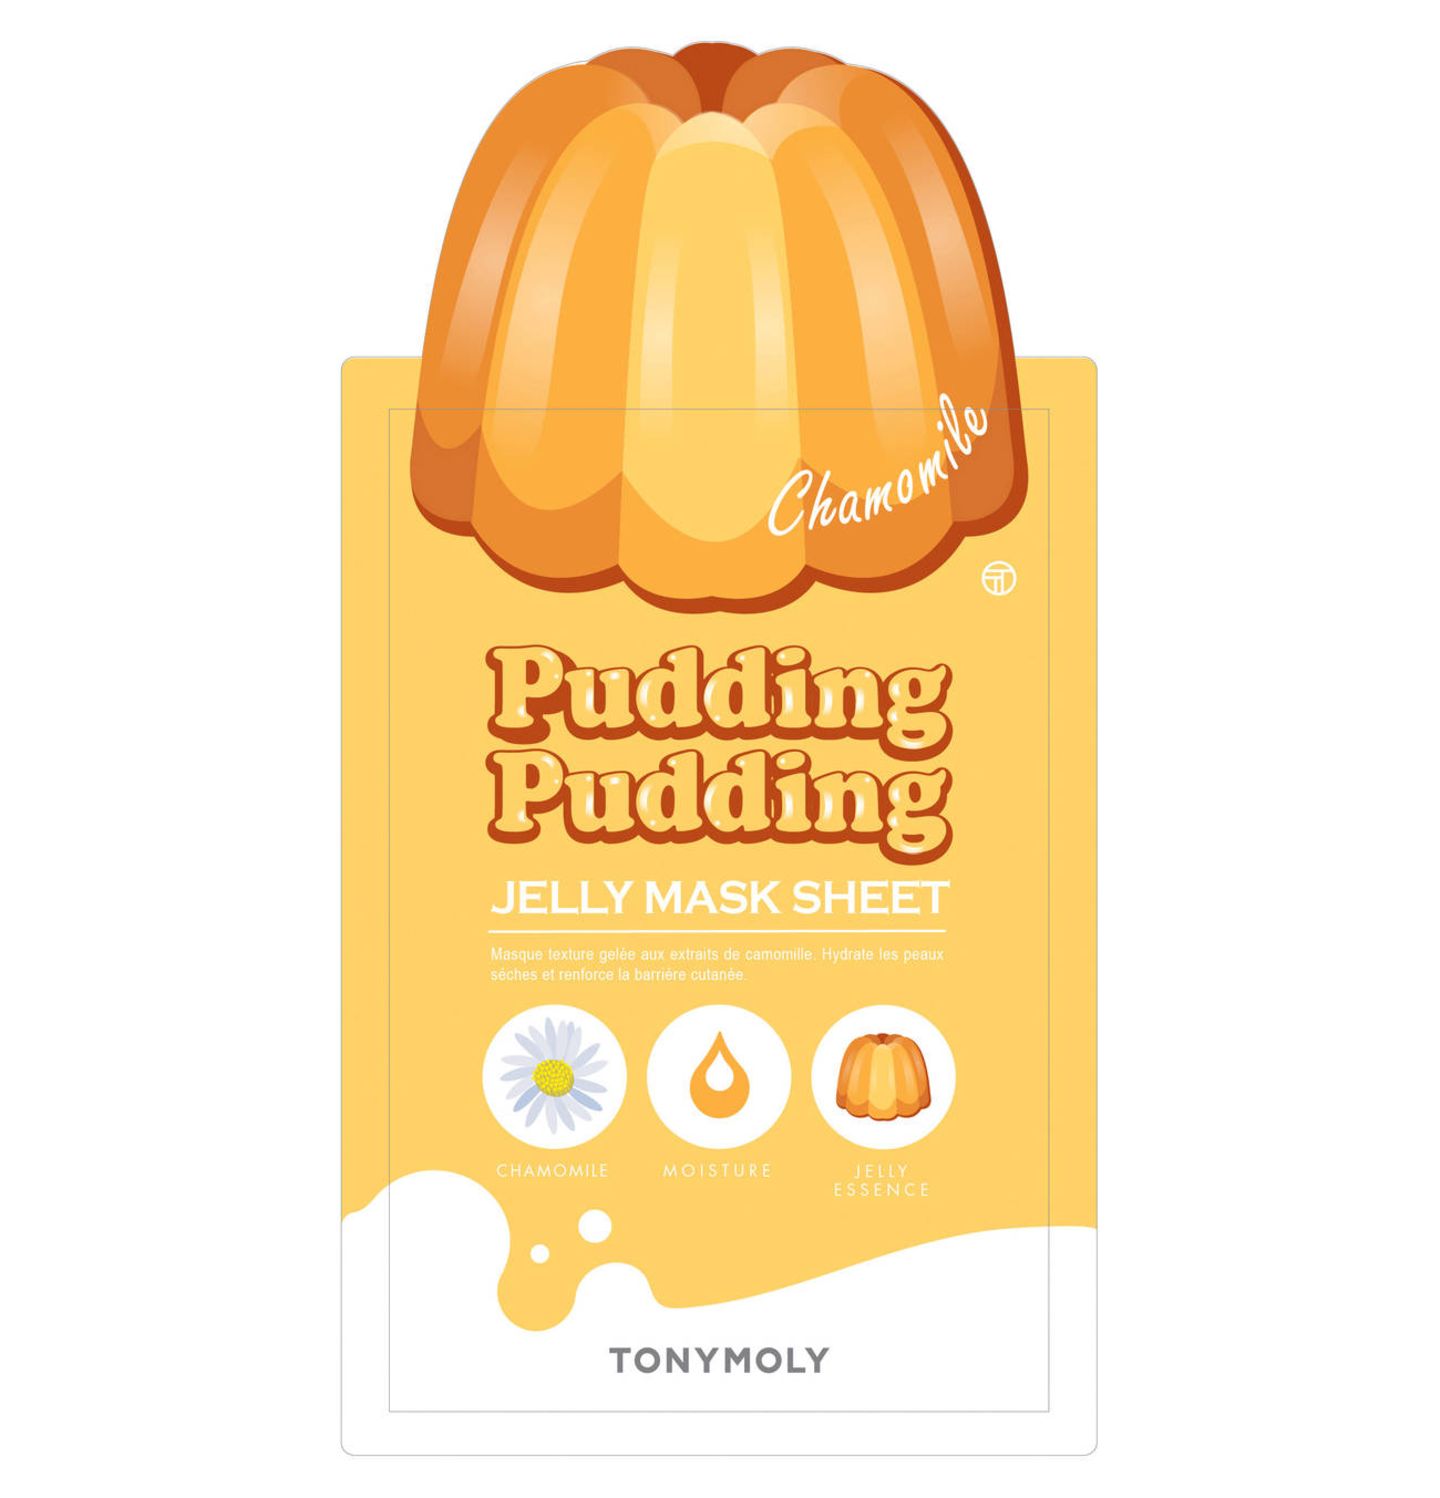 "Pudding Pudding Jelly Mask Sheet" von Tony Moly